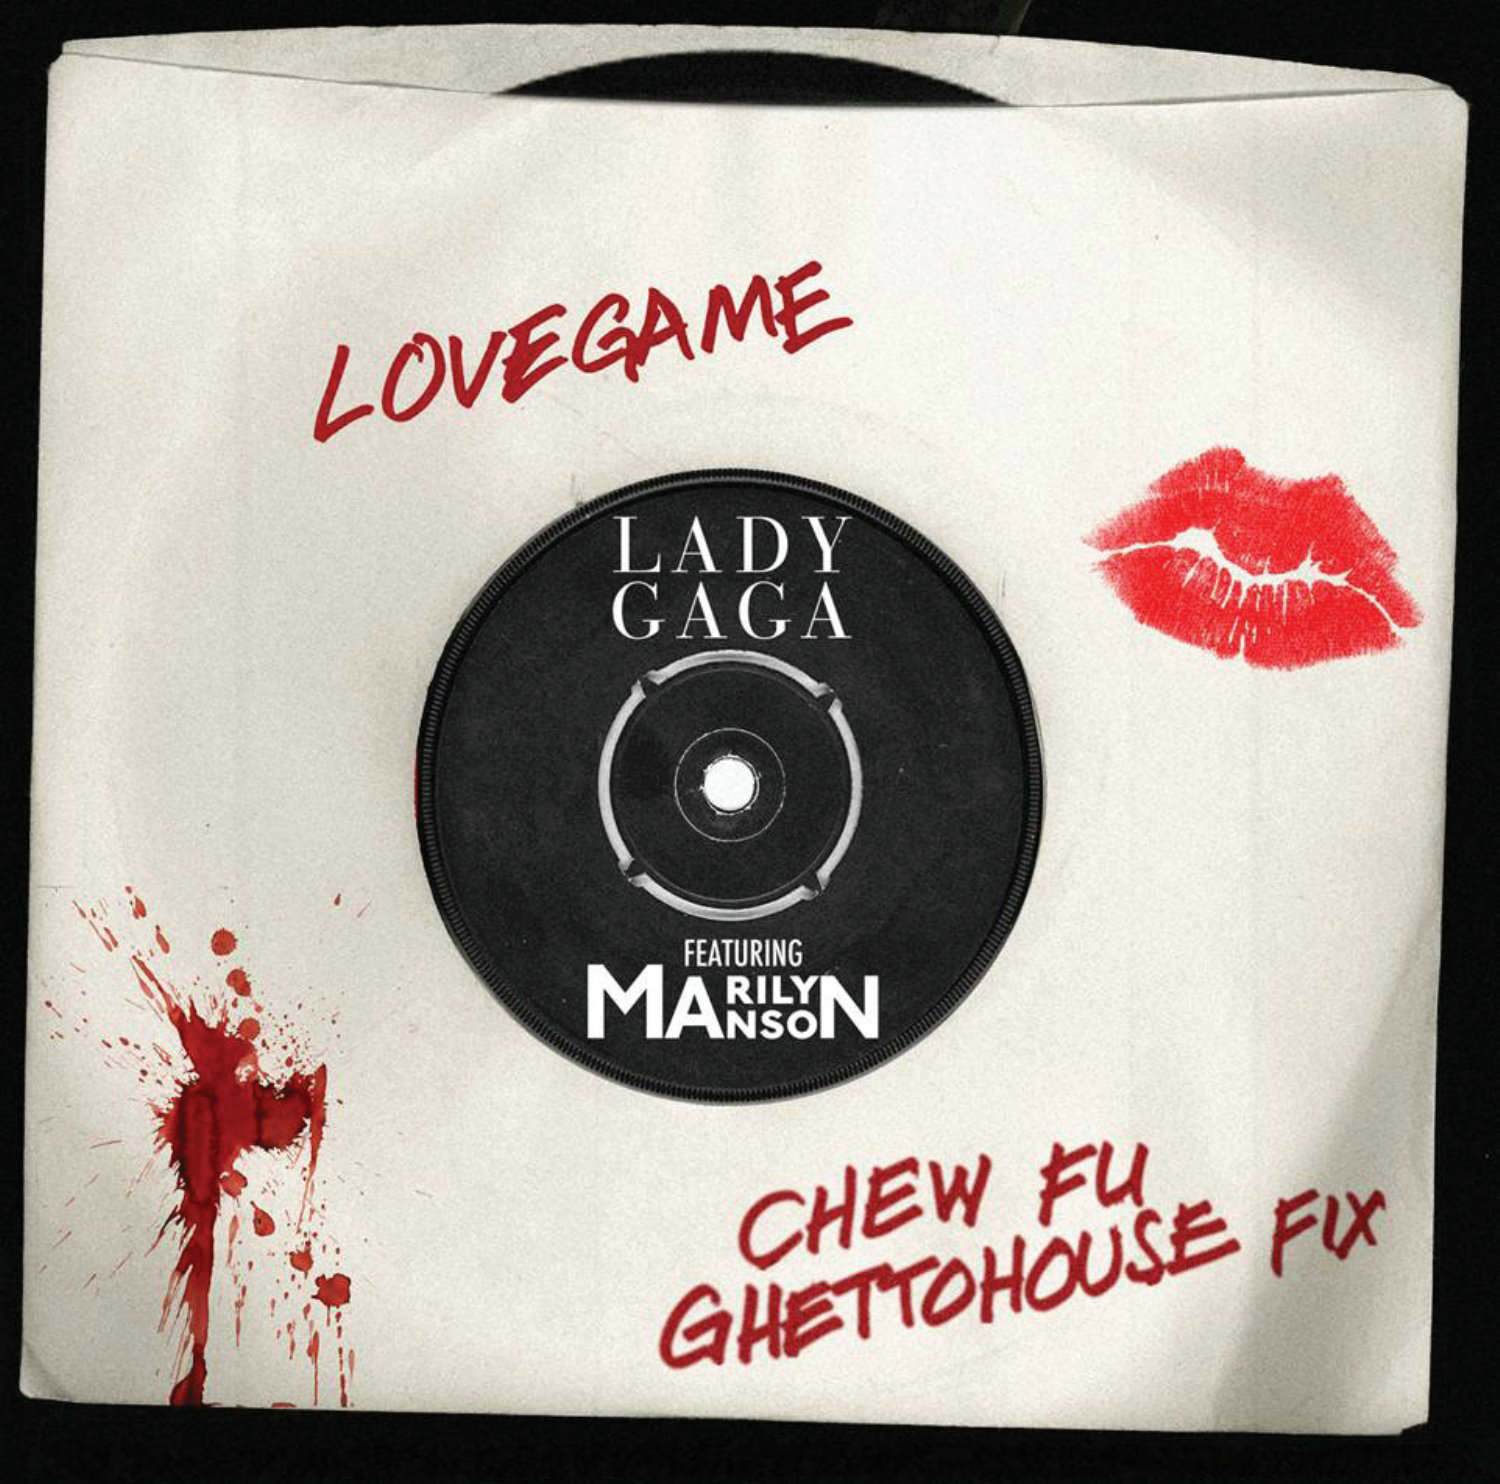 Survivor >> The Remix | Ganadora: LoveGame (Chew Fu Ghettohouse Fix) - Página 2 LoveGame_(feat_MM)